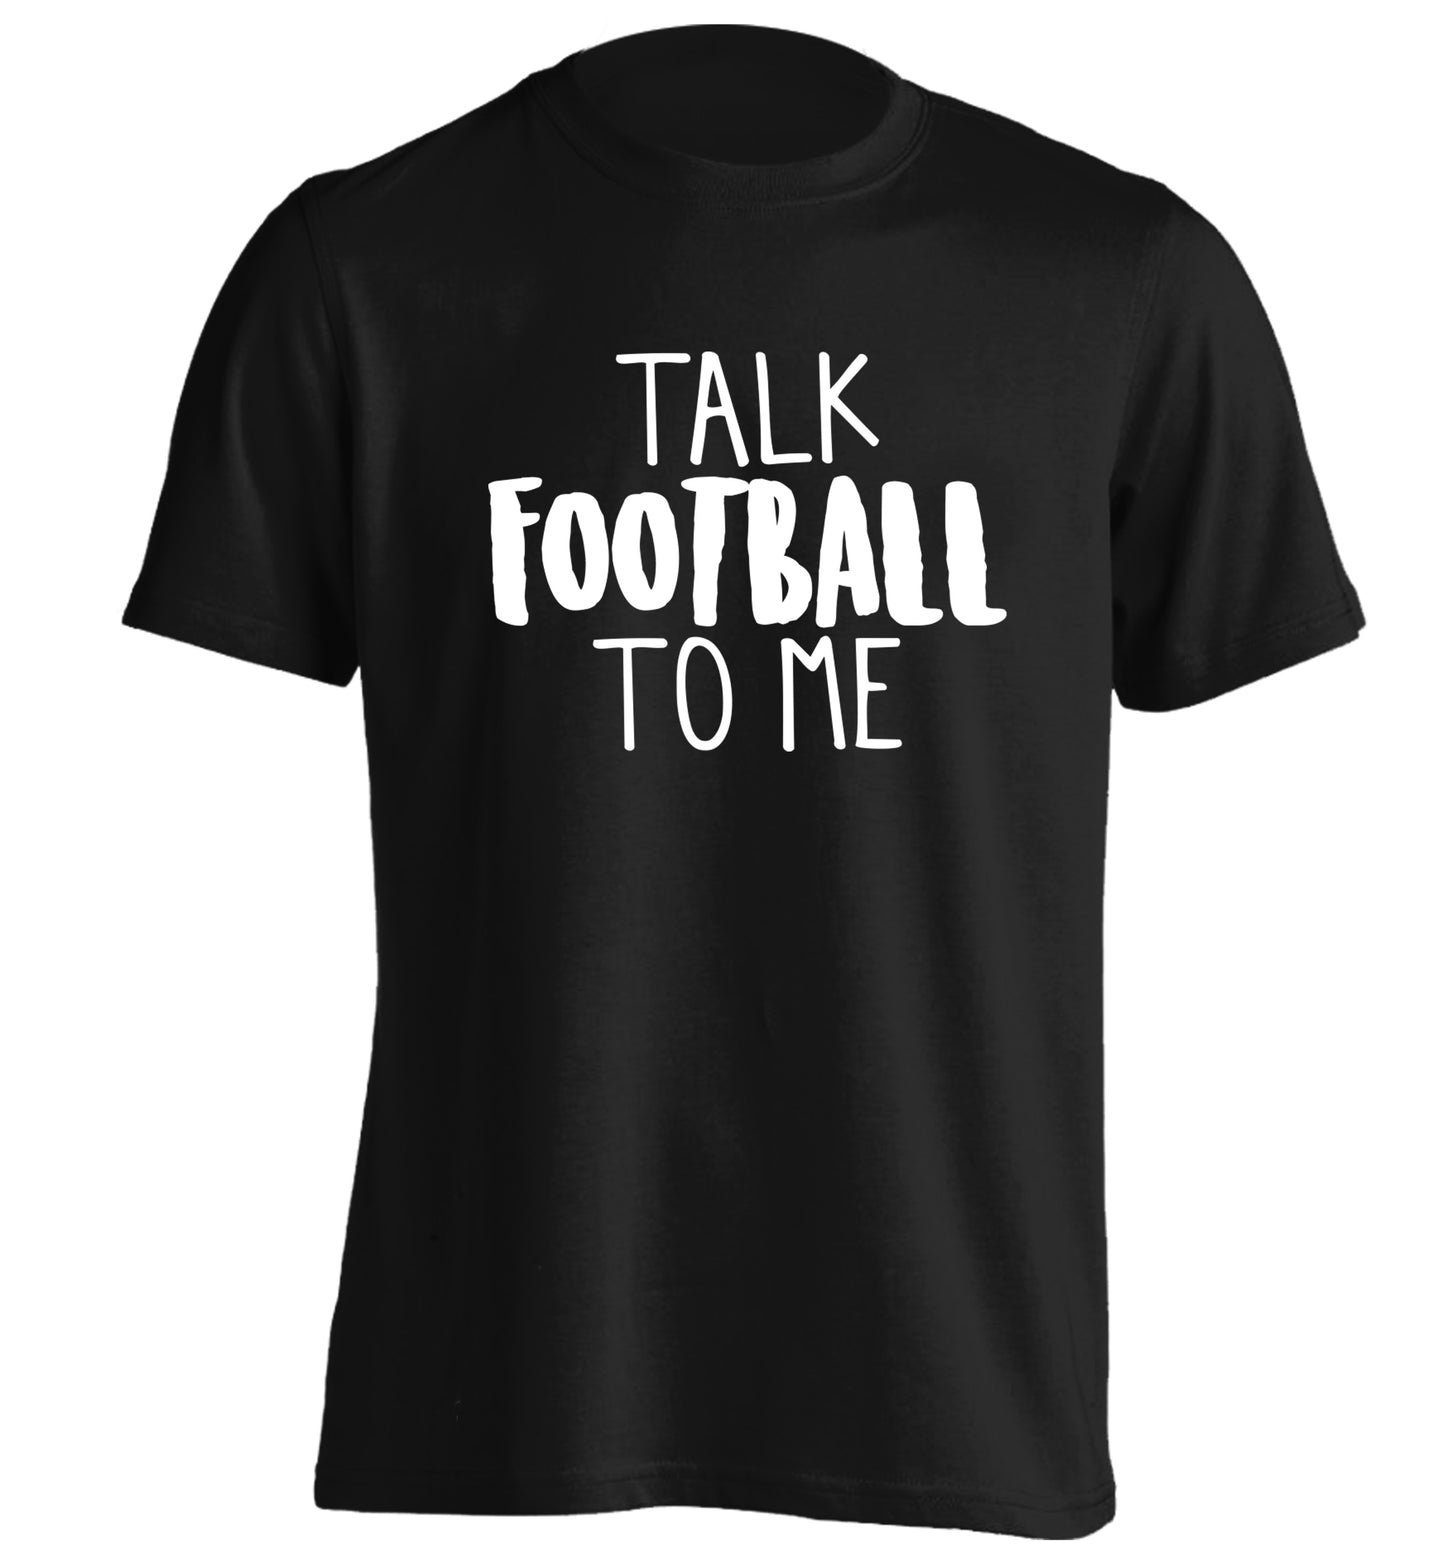 Talk football to me adults unisexblack Tshirt 2XL